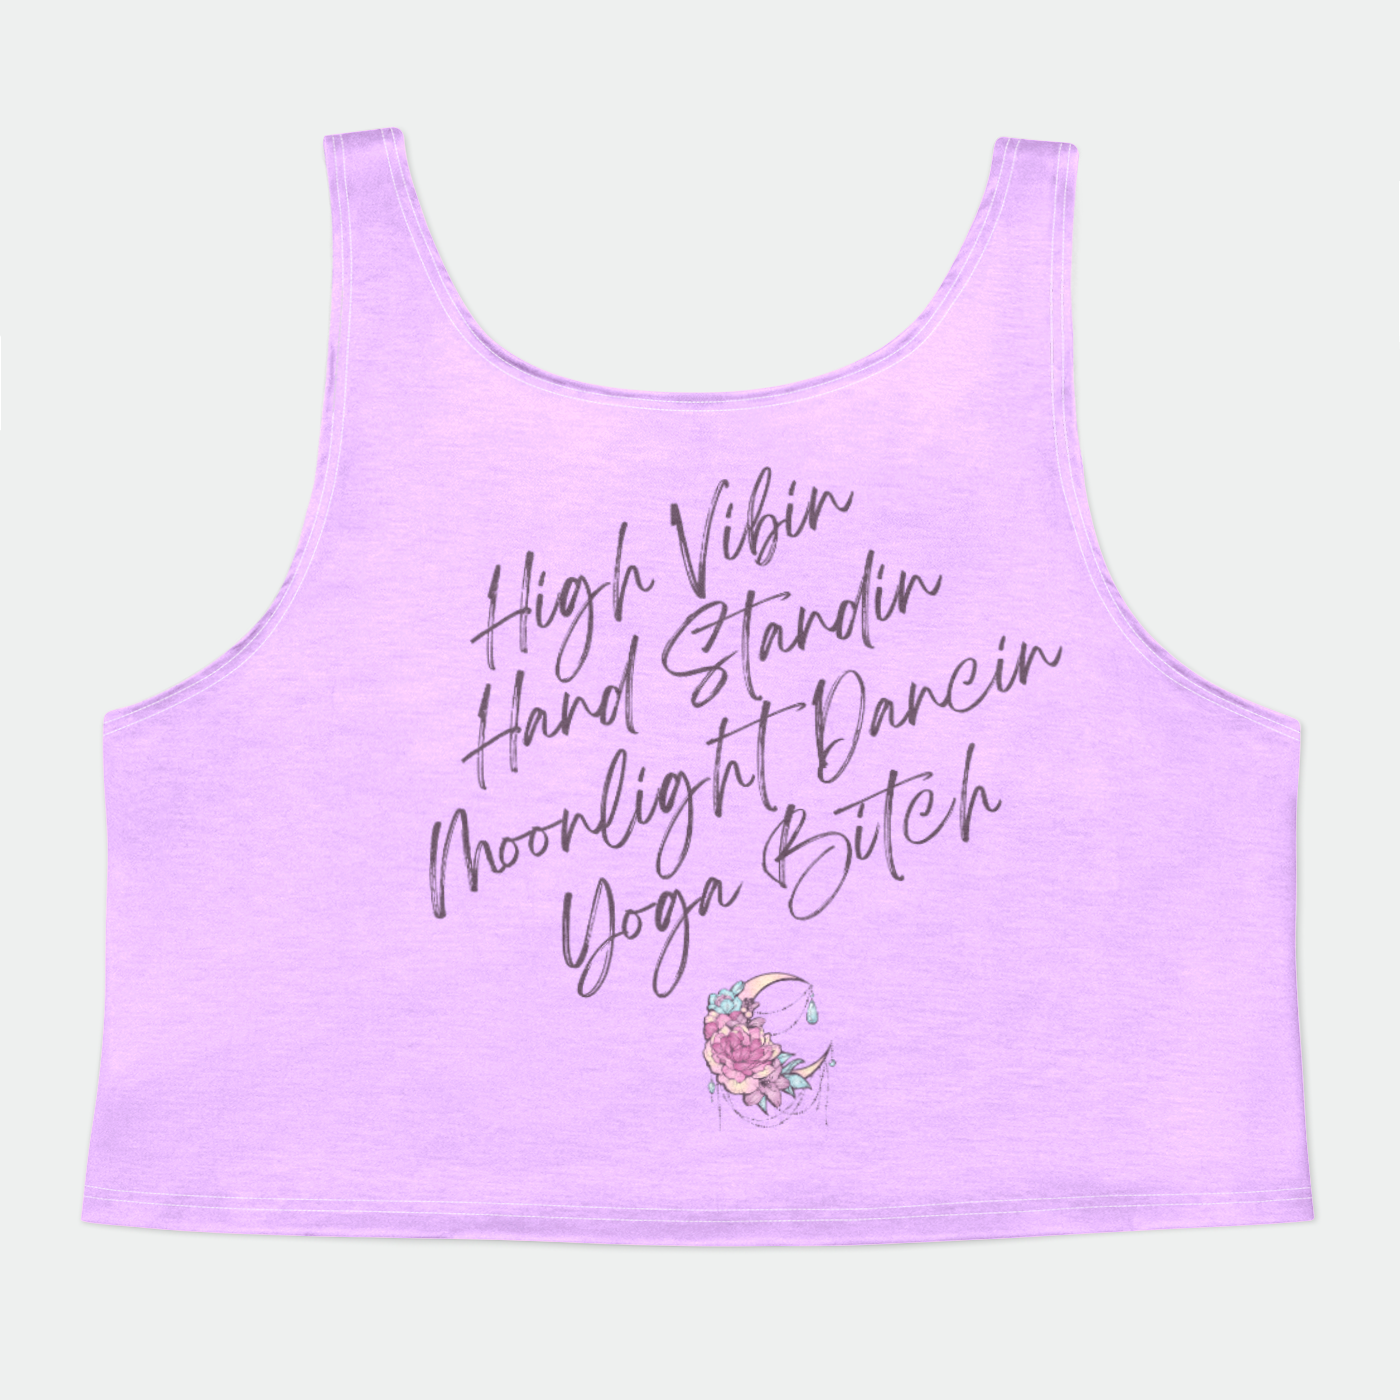 High Vibin Yoga Bitch Baby Tank - Yoga Bitch